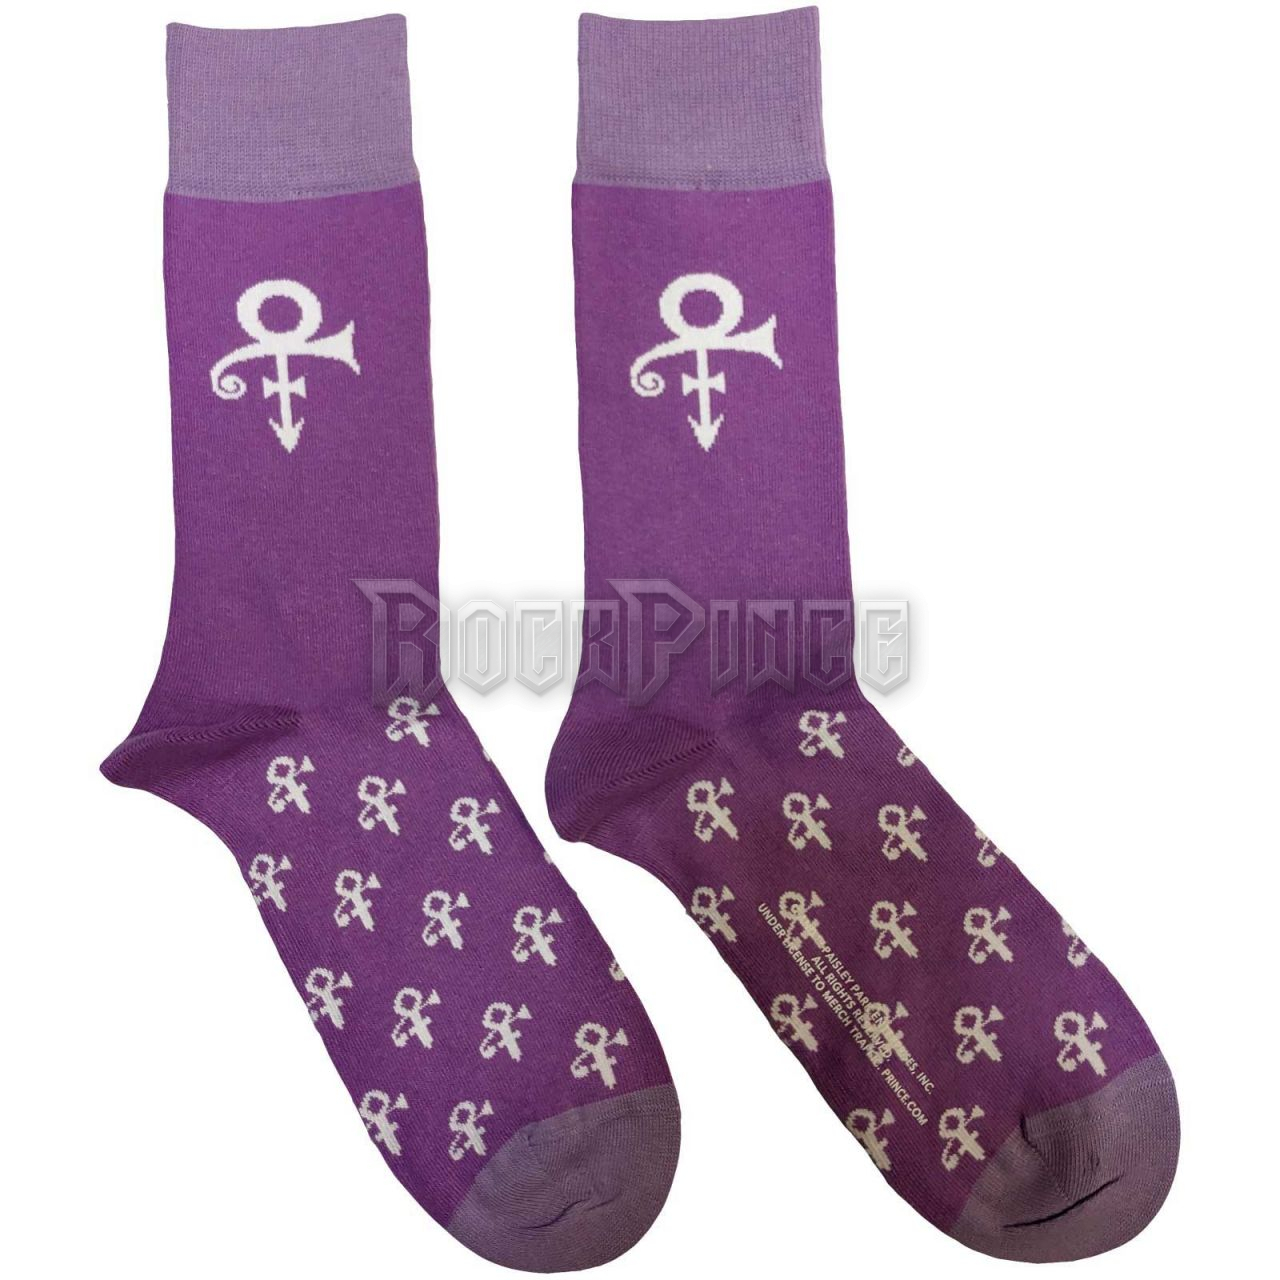 Prince - Symbol - unisex bokazokni (egy méret: 40-45) - PRINSCK03MPU